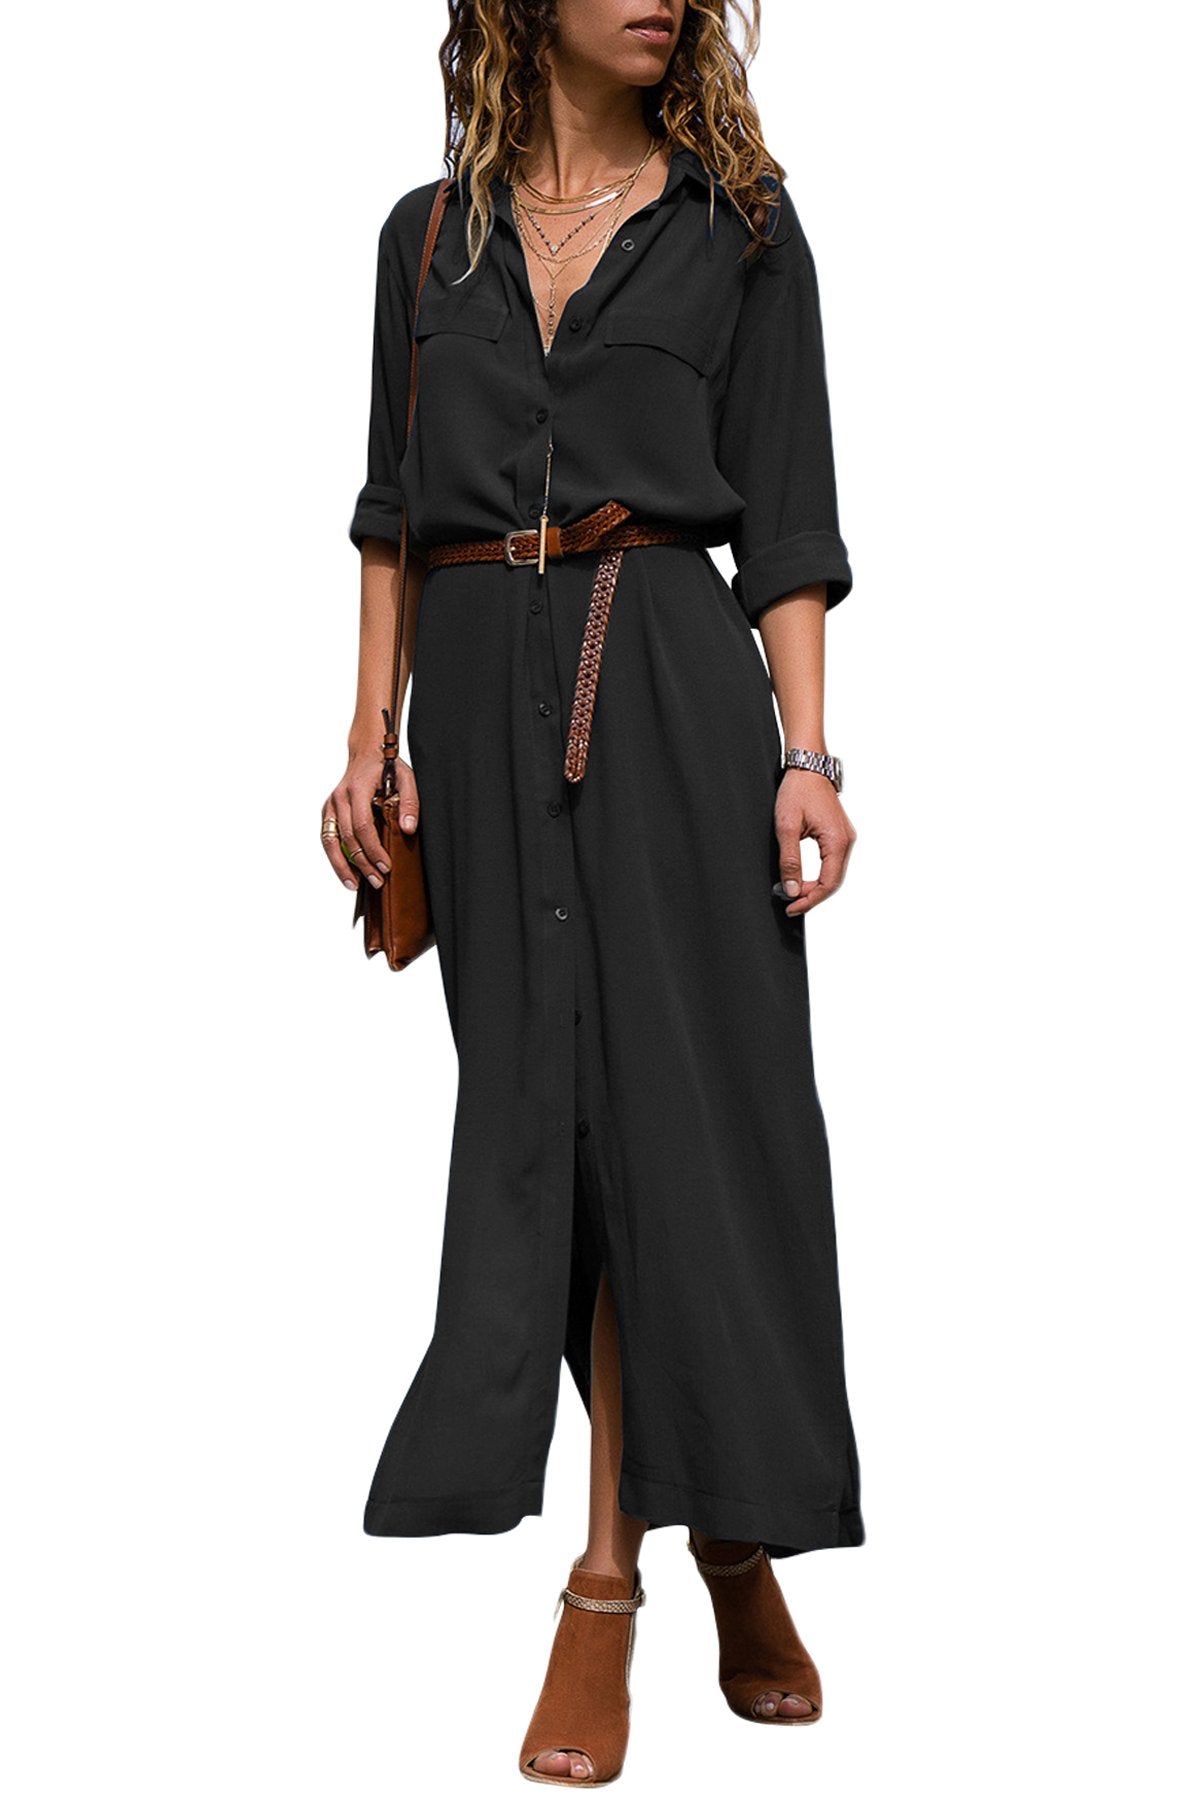 Casual Black Slit Maxi Shirt Dress with Sash